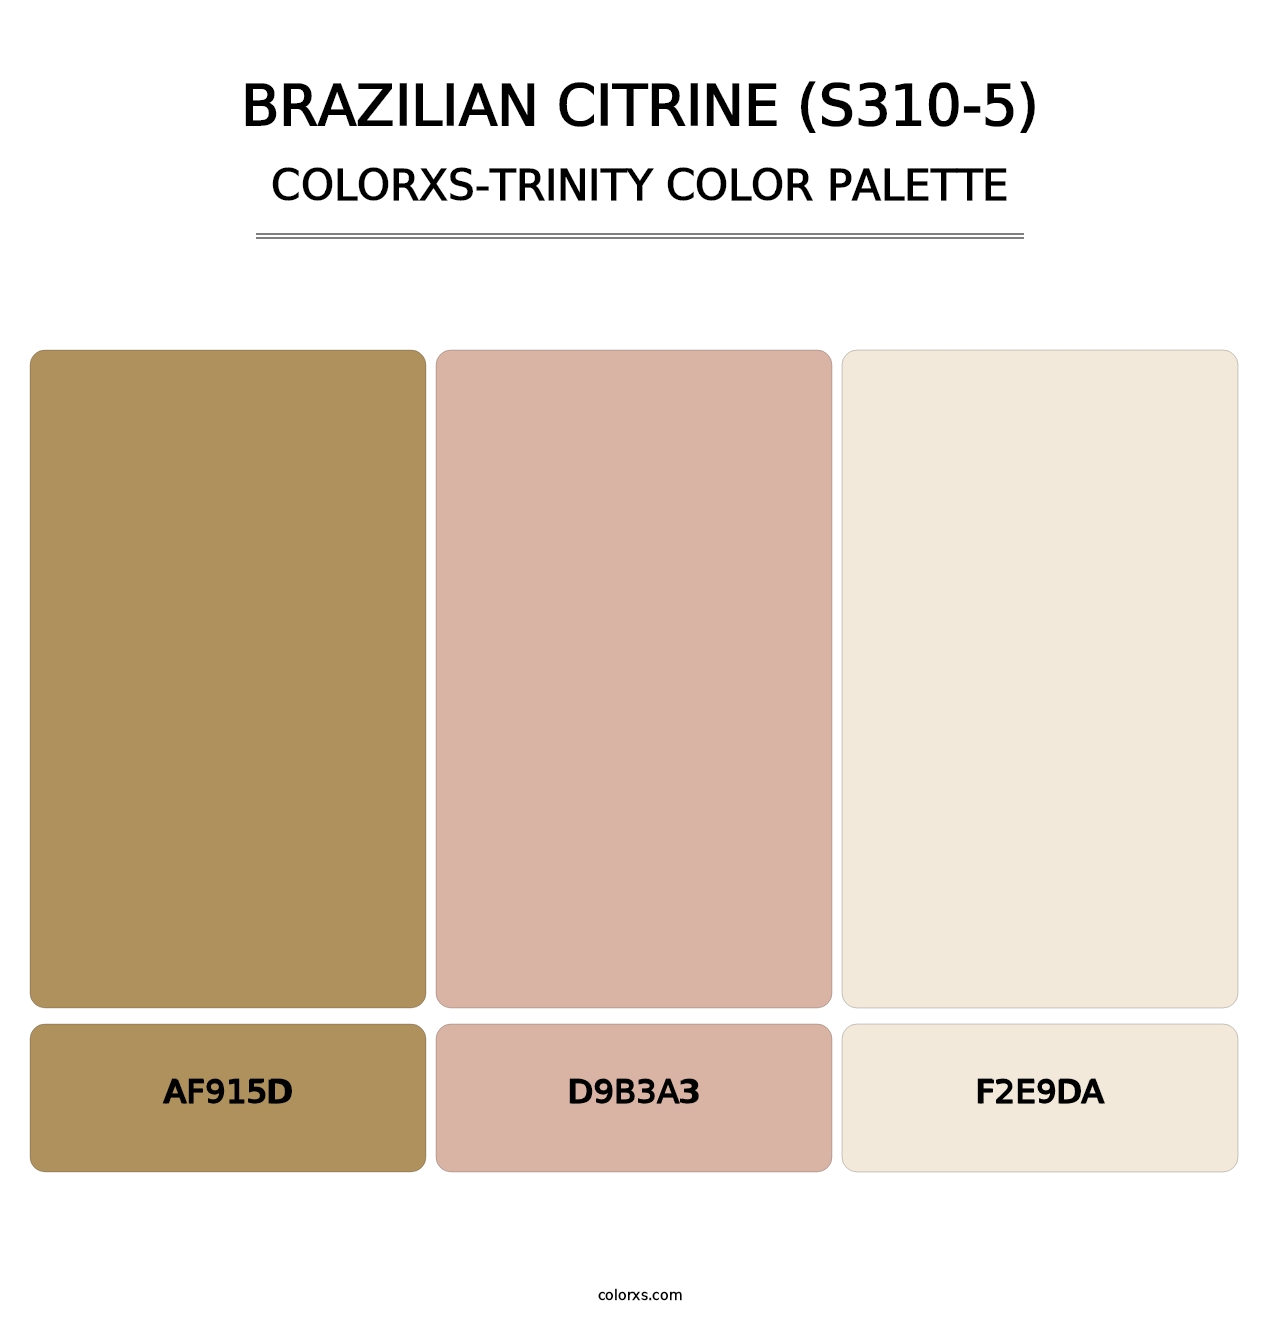 Brazilian Citrine (S310-5) - Colorxs Trinity Palette